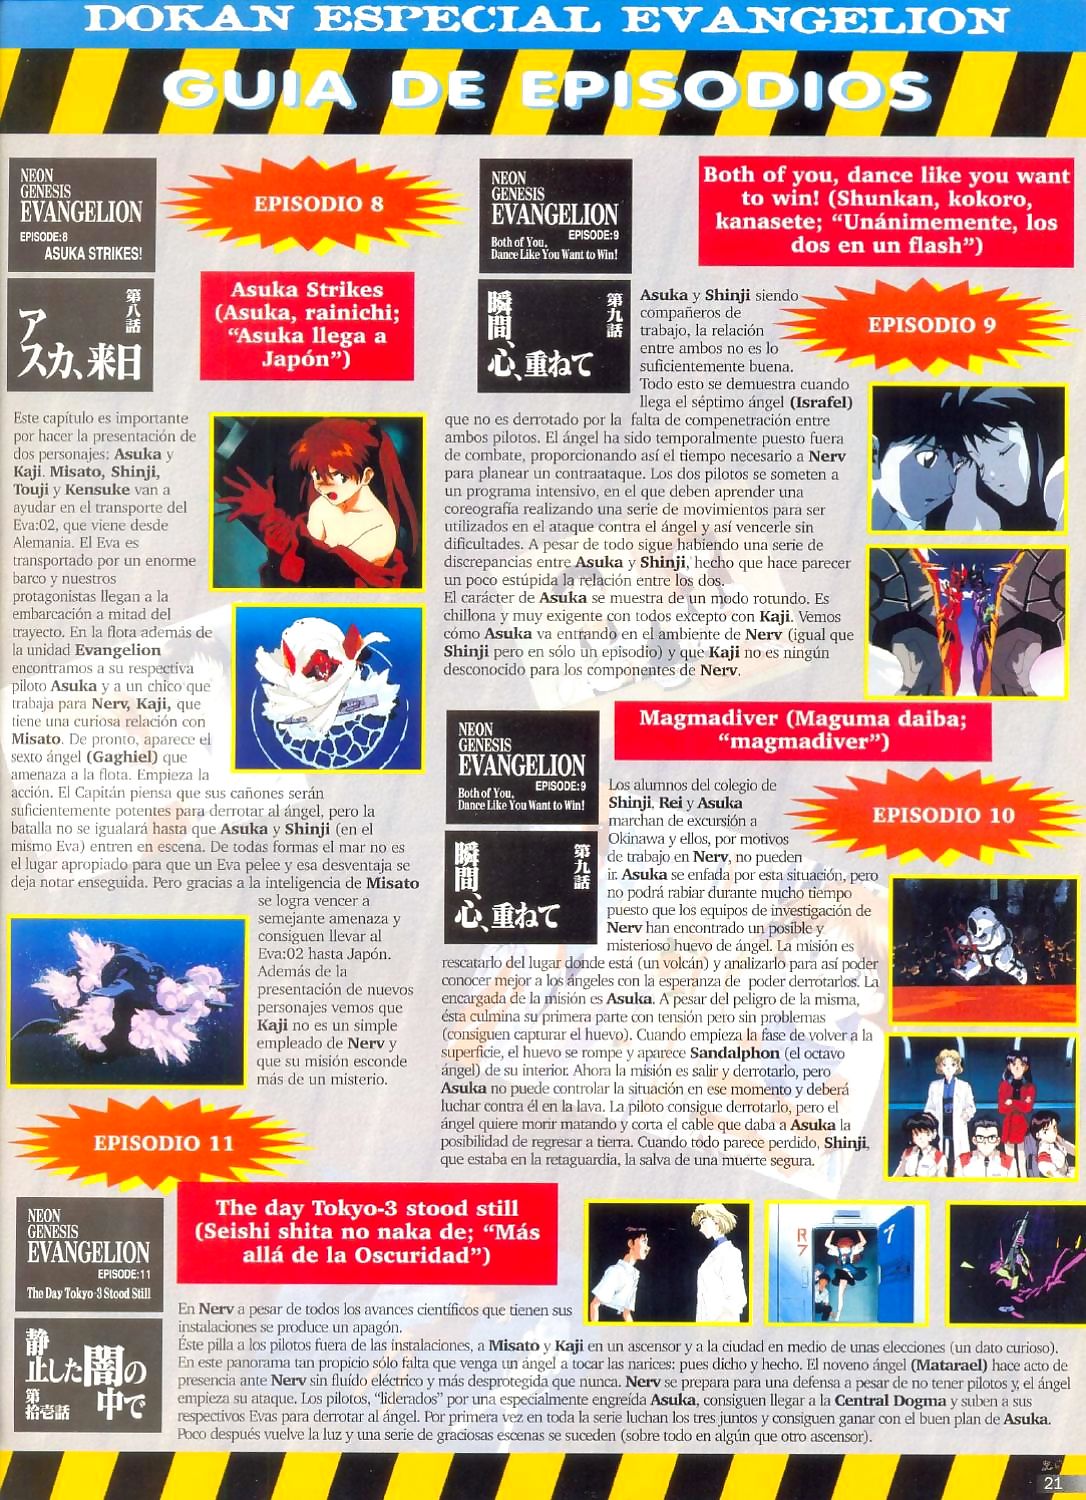 Revista Dokan Evangelion - part 2